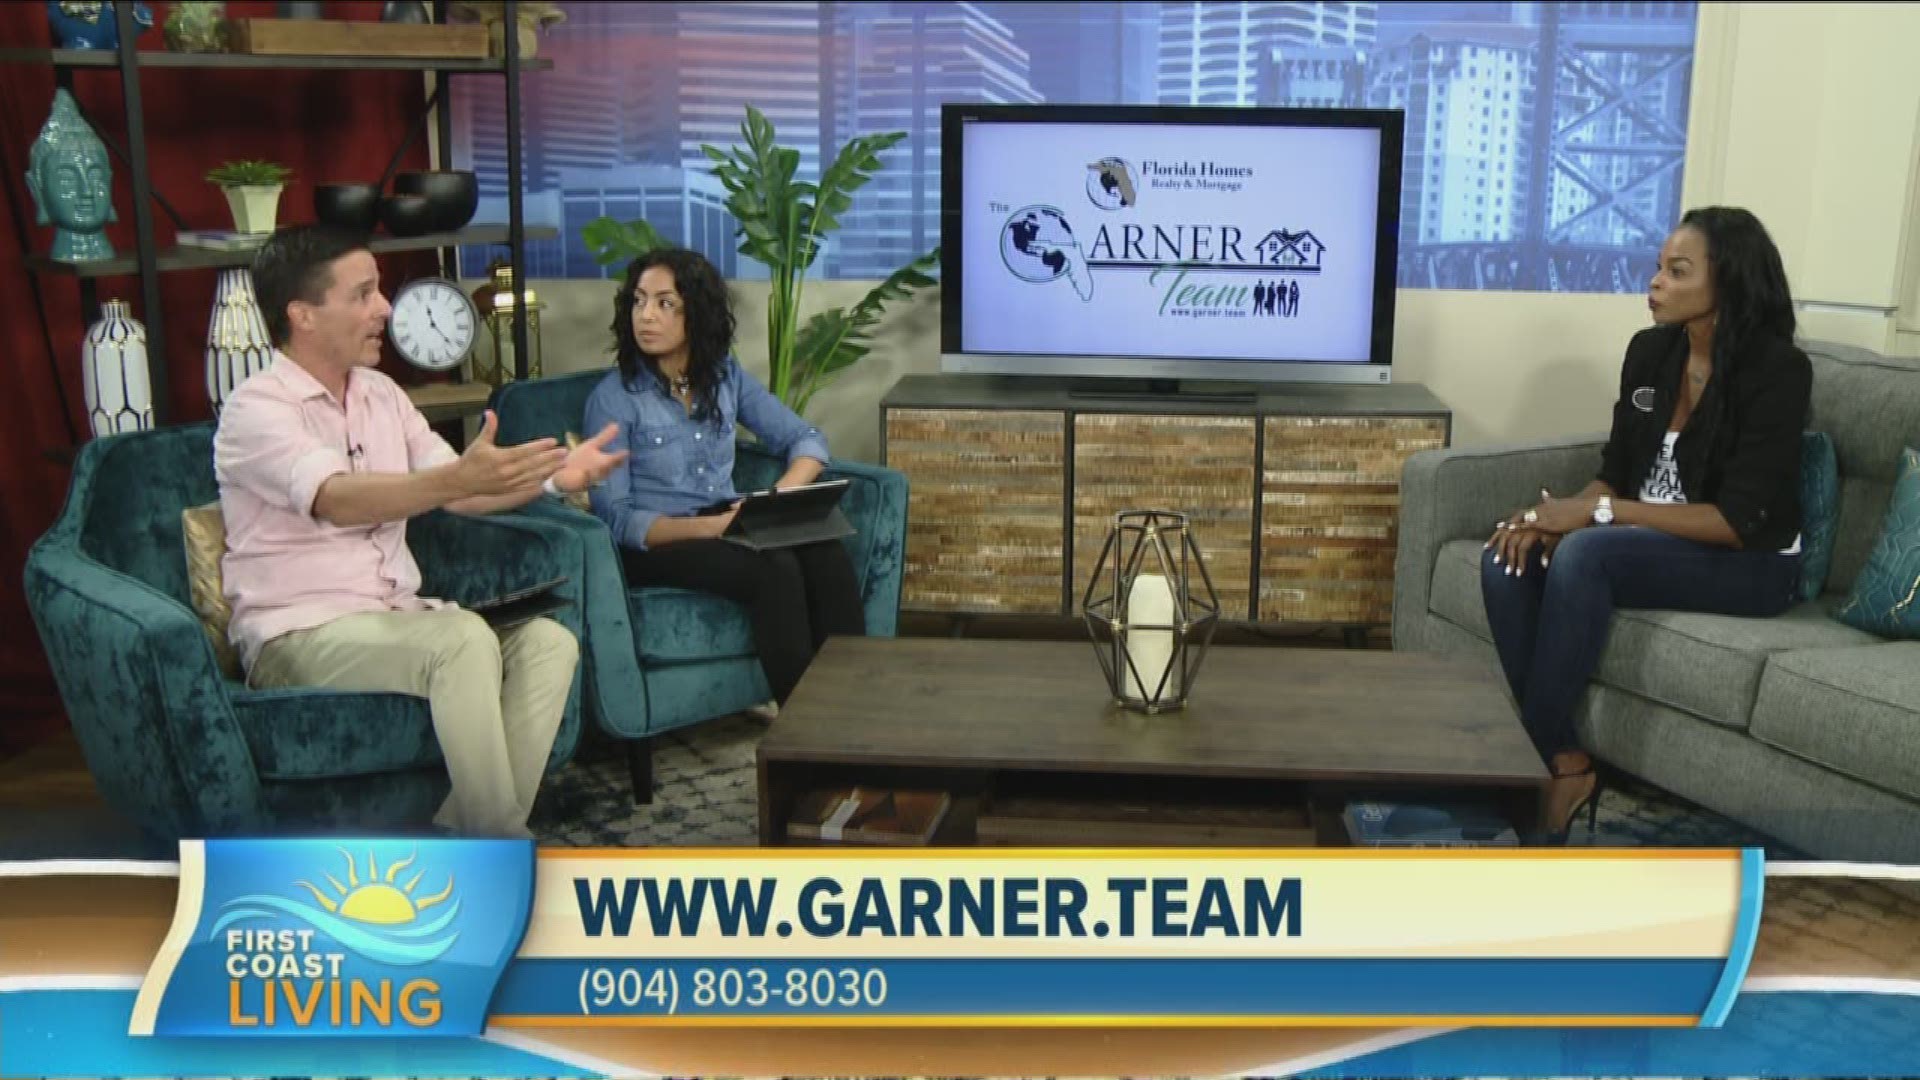 Lisa Garner is a part of the Garner Team at Florida Homes Realty & Mortgage.